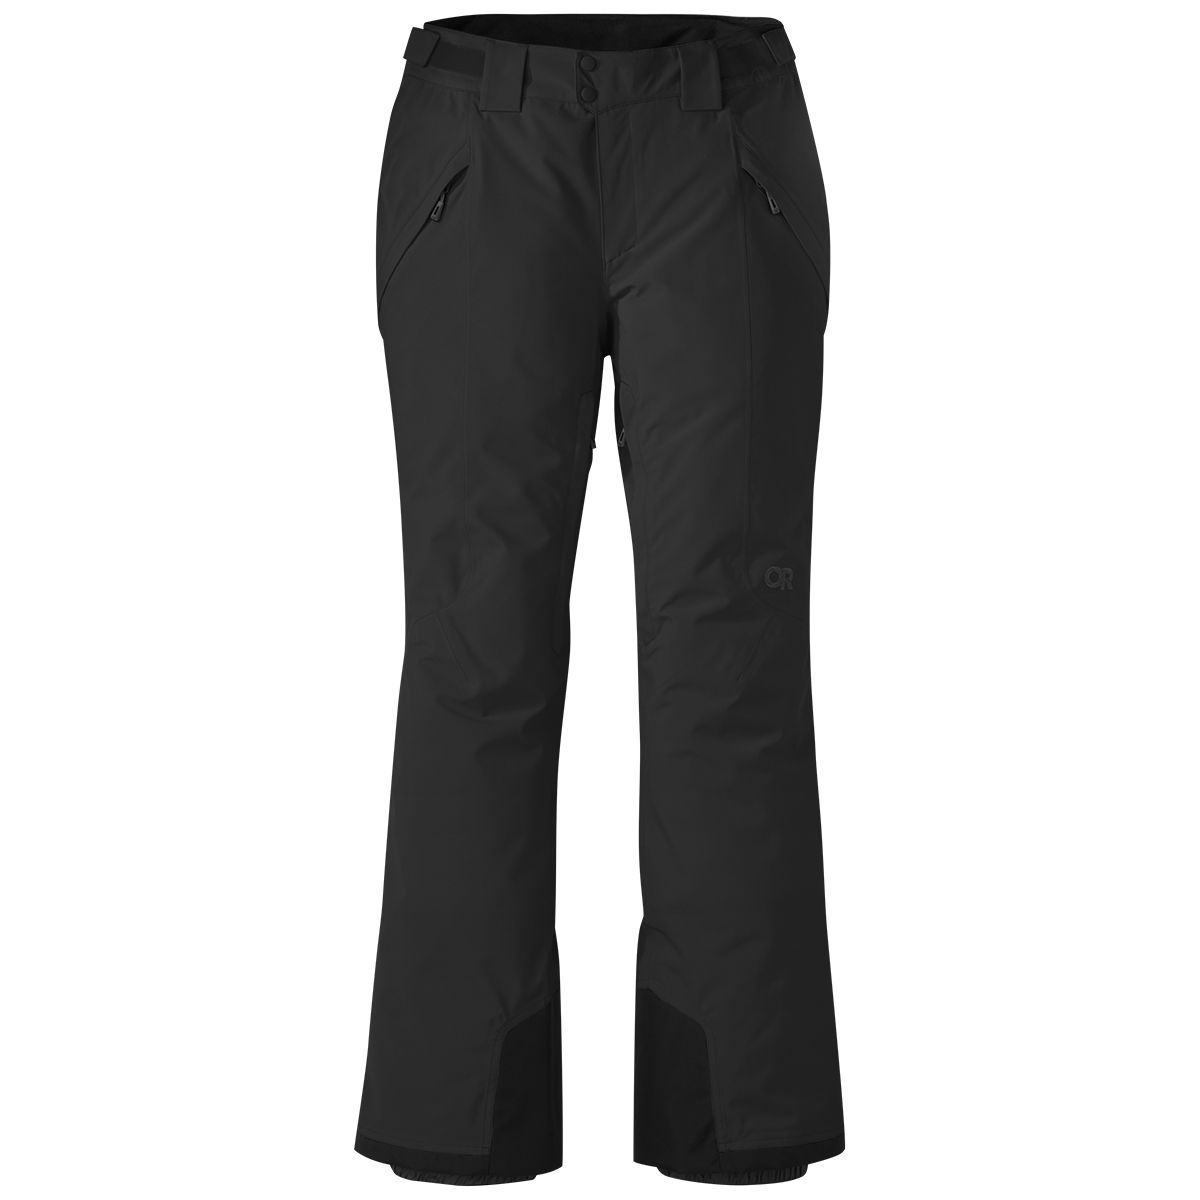 Eastern Mountain Sports Womens Ski pants black fleece lined size medium  NWOT - $51 - From Courtney